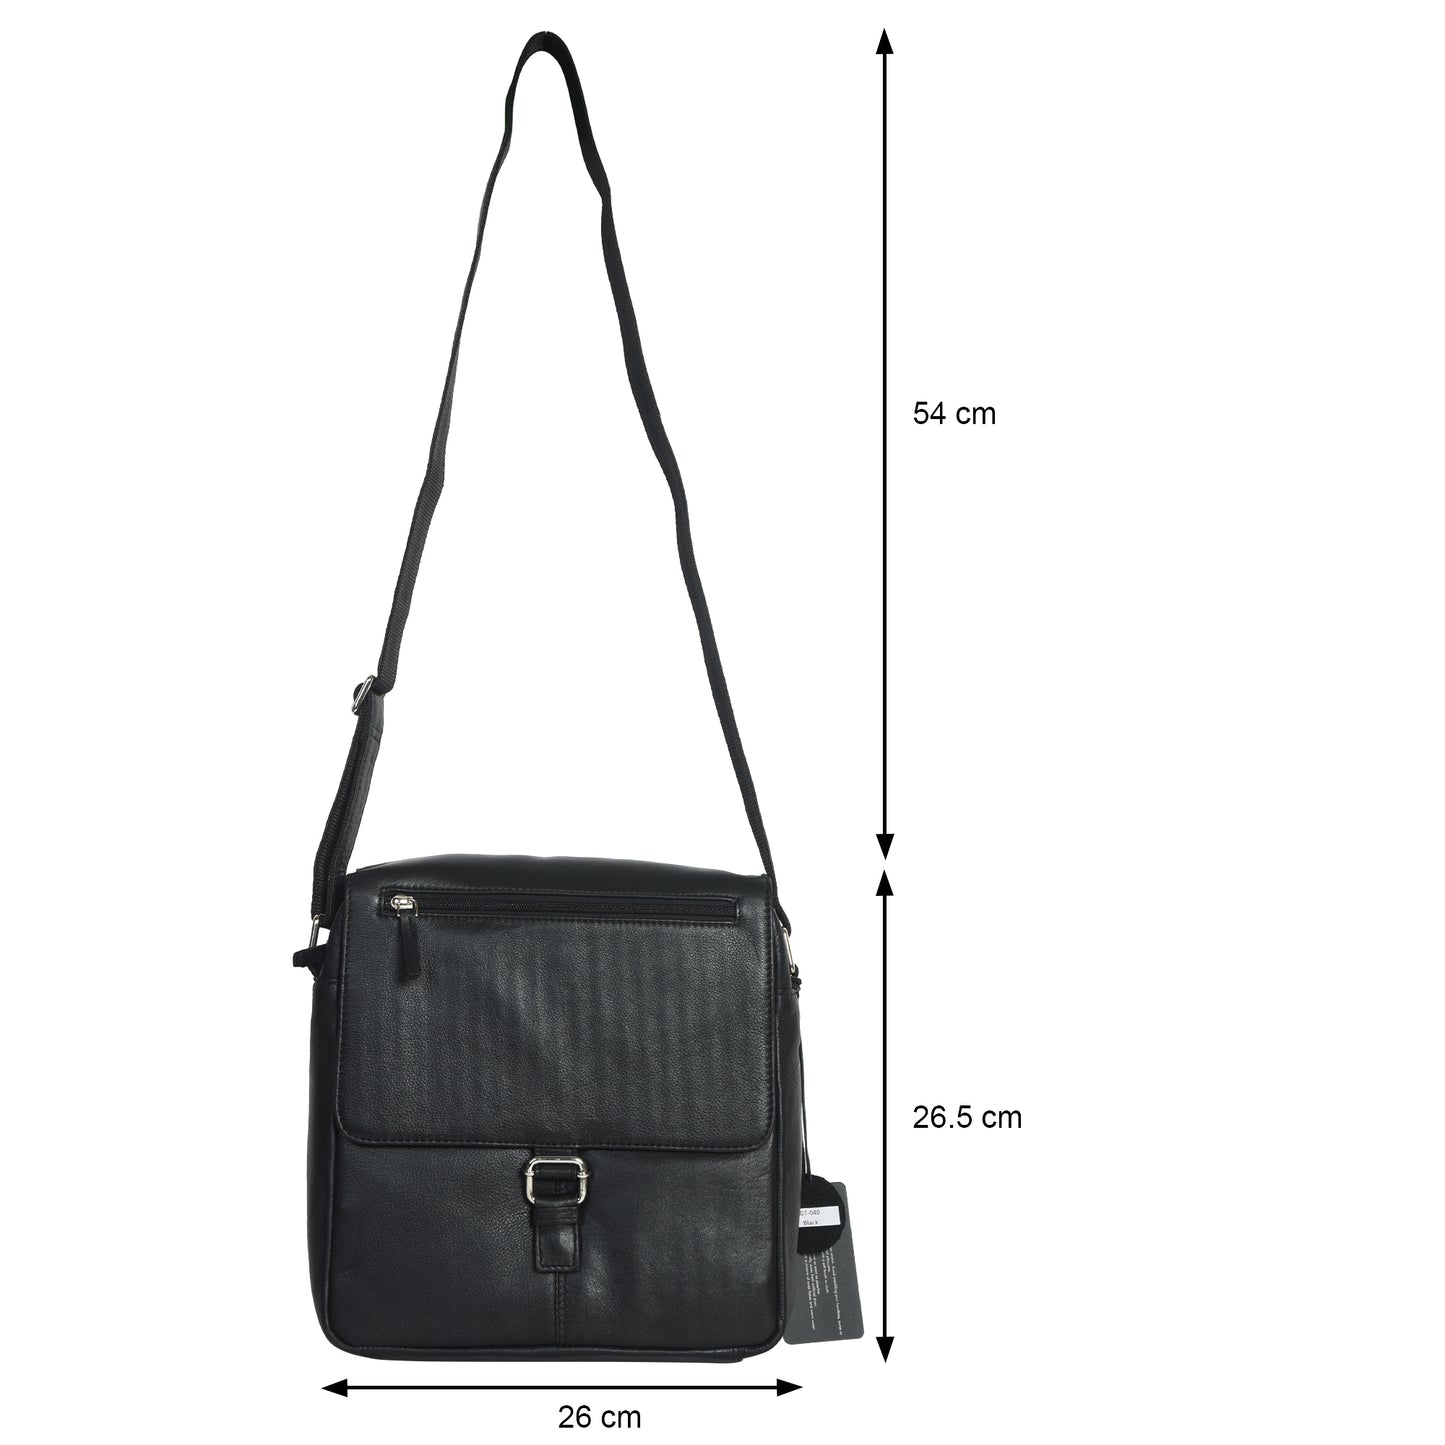 GT-040: G&T Full-grain Leather Medium Flap-over Men's Messenger Bag, Crossbody Bag with iPad Compartment